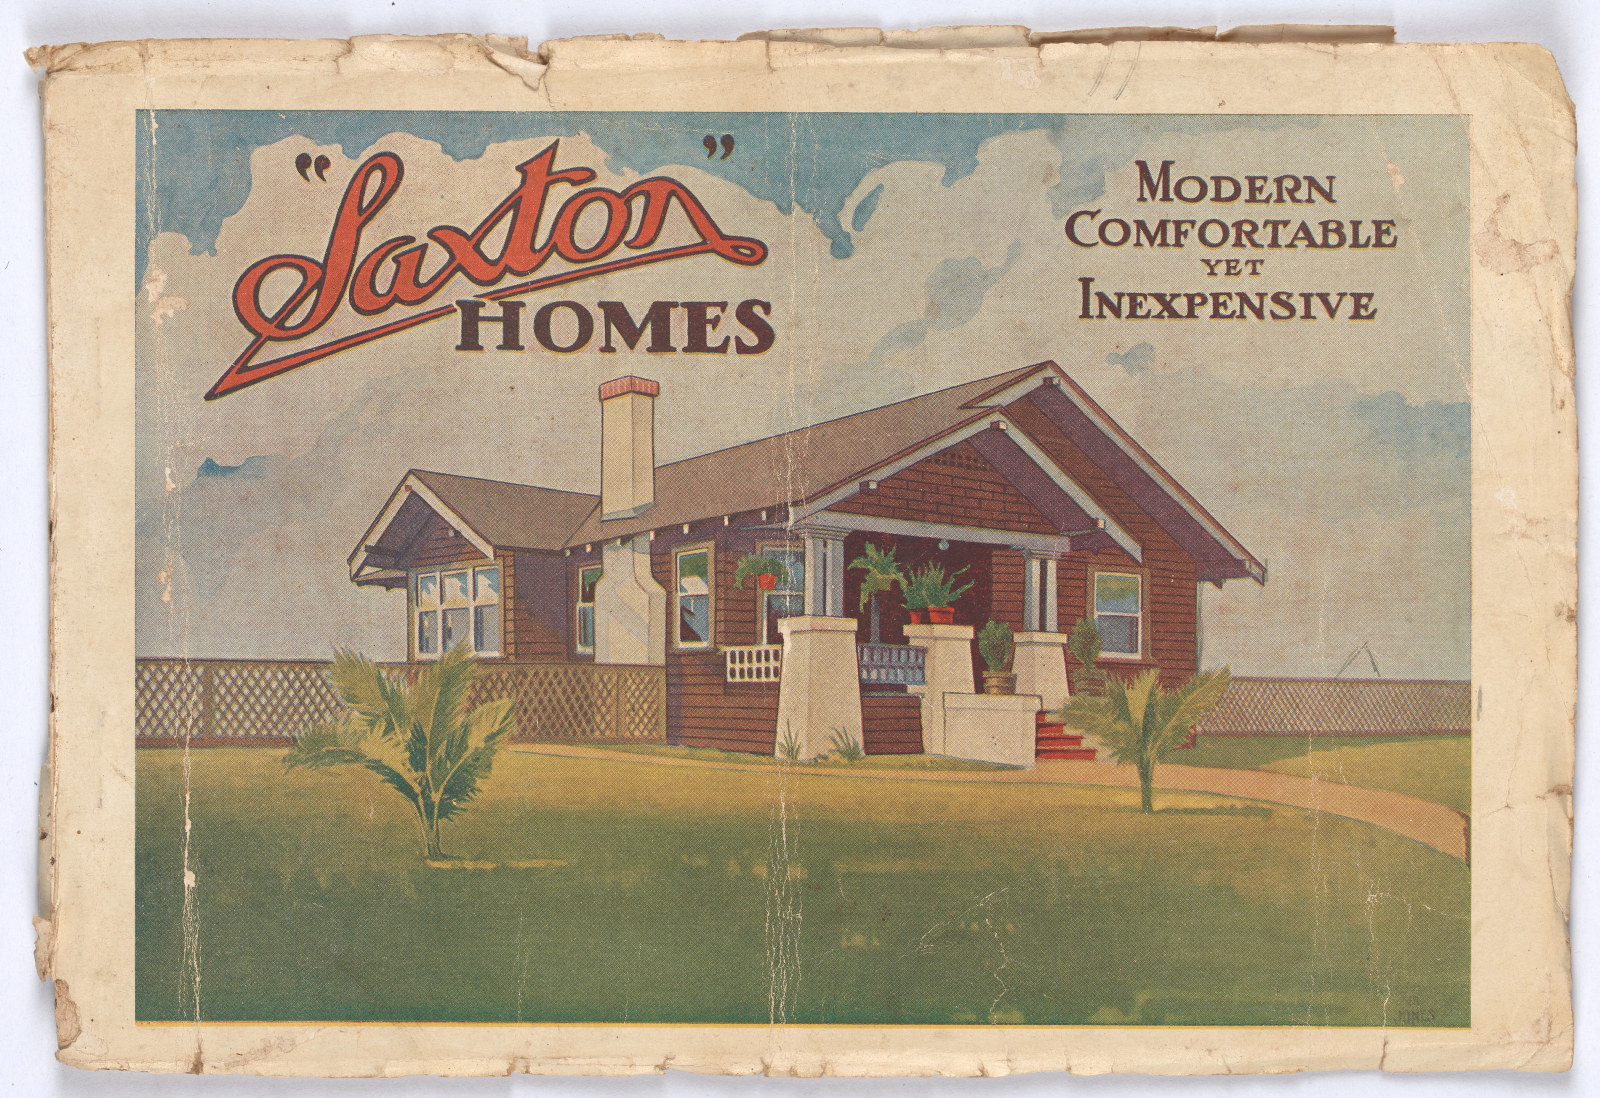 Saxton homes : modern, comfortable yet inexpensive. [trade catalogue]